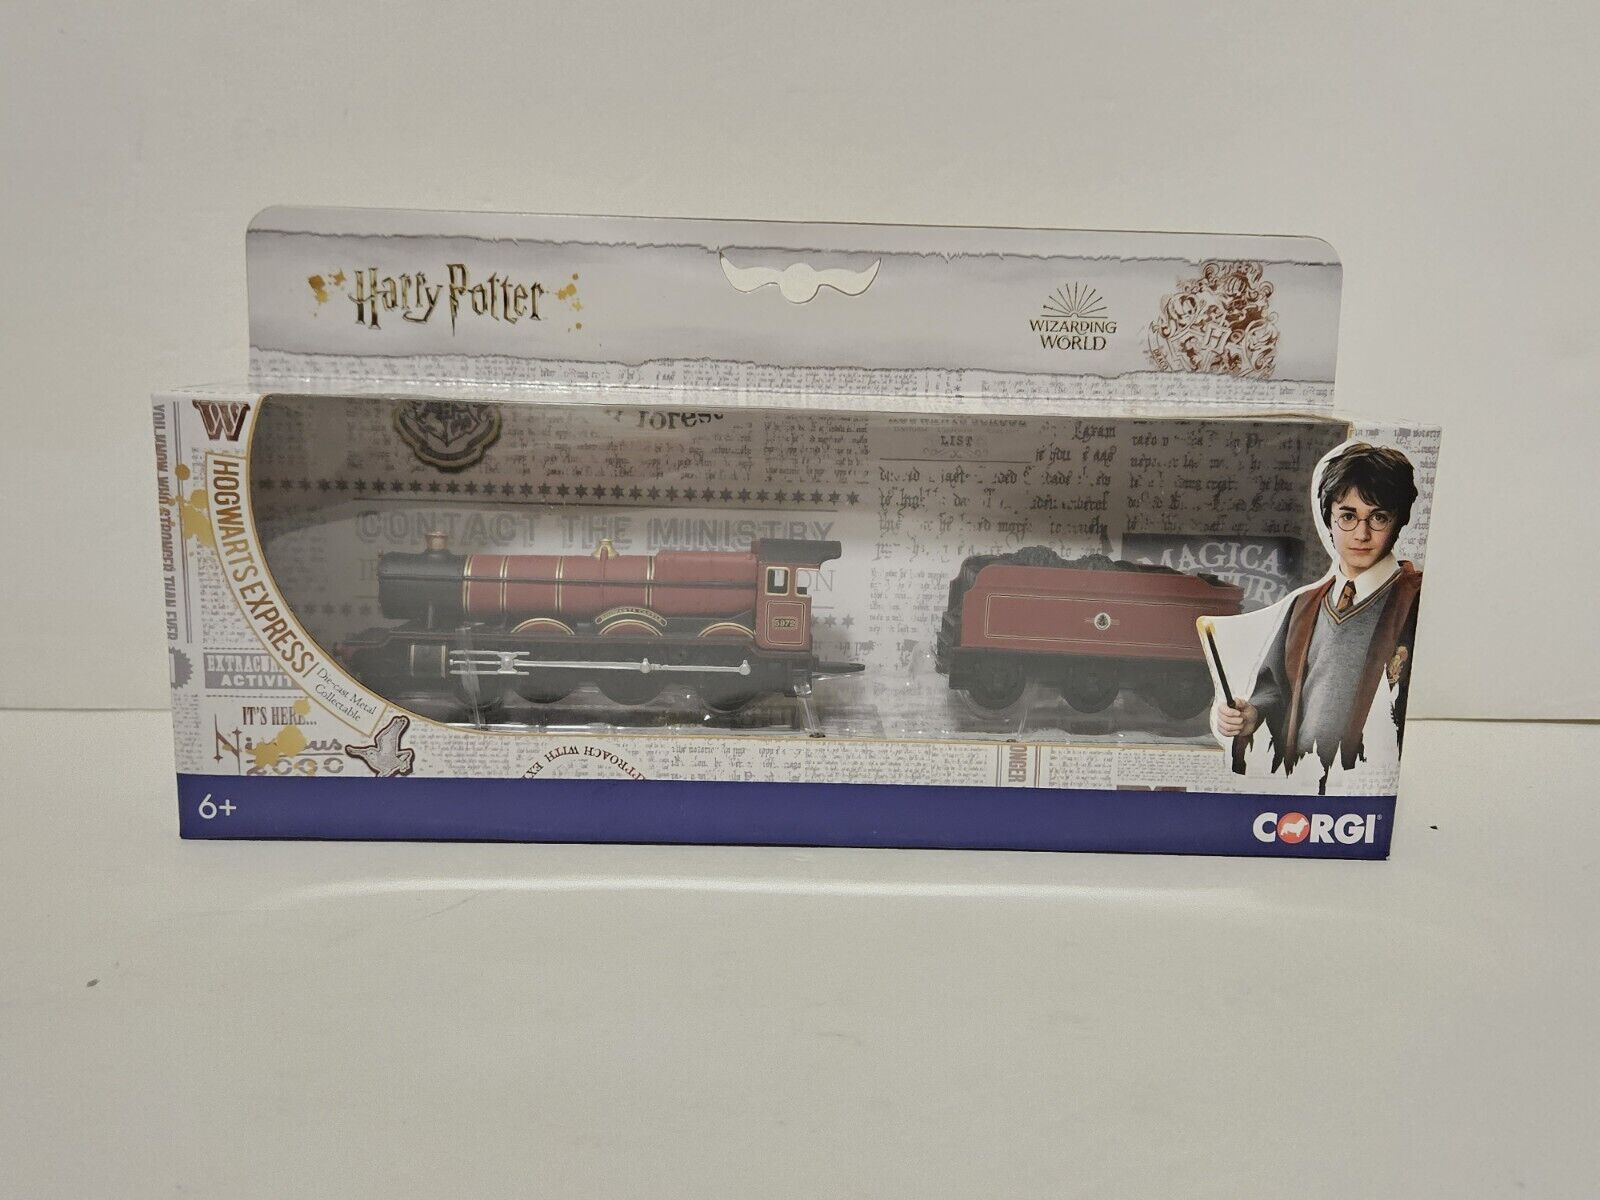 Harry Potter Hogwarts Express by Corgi Die Cast Train *NEW*